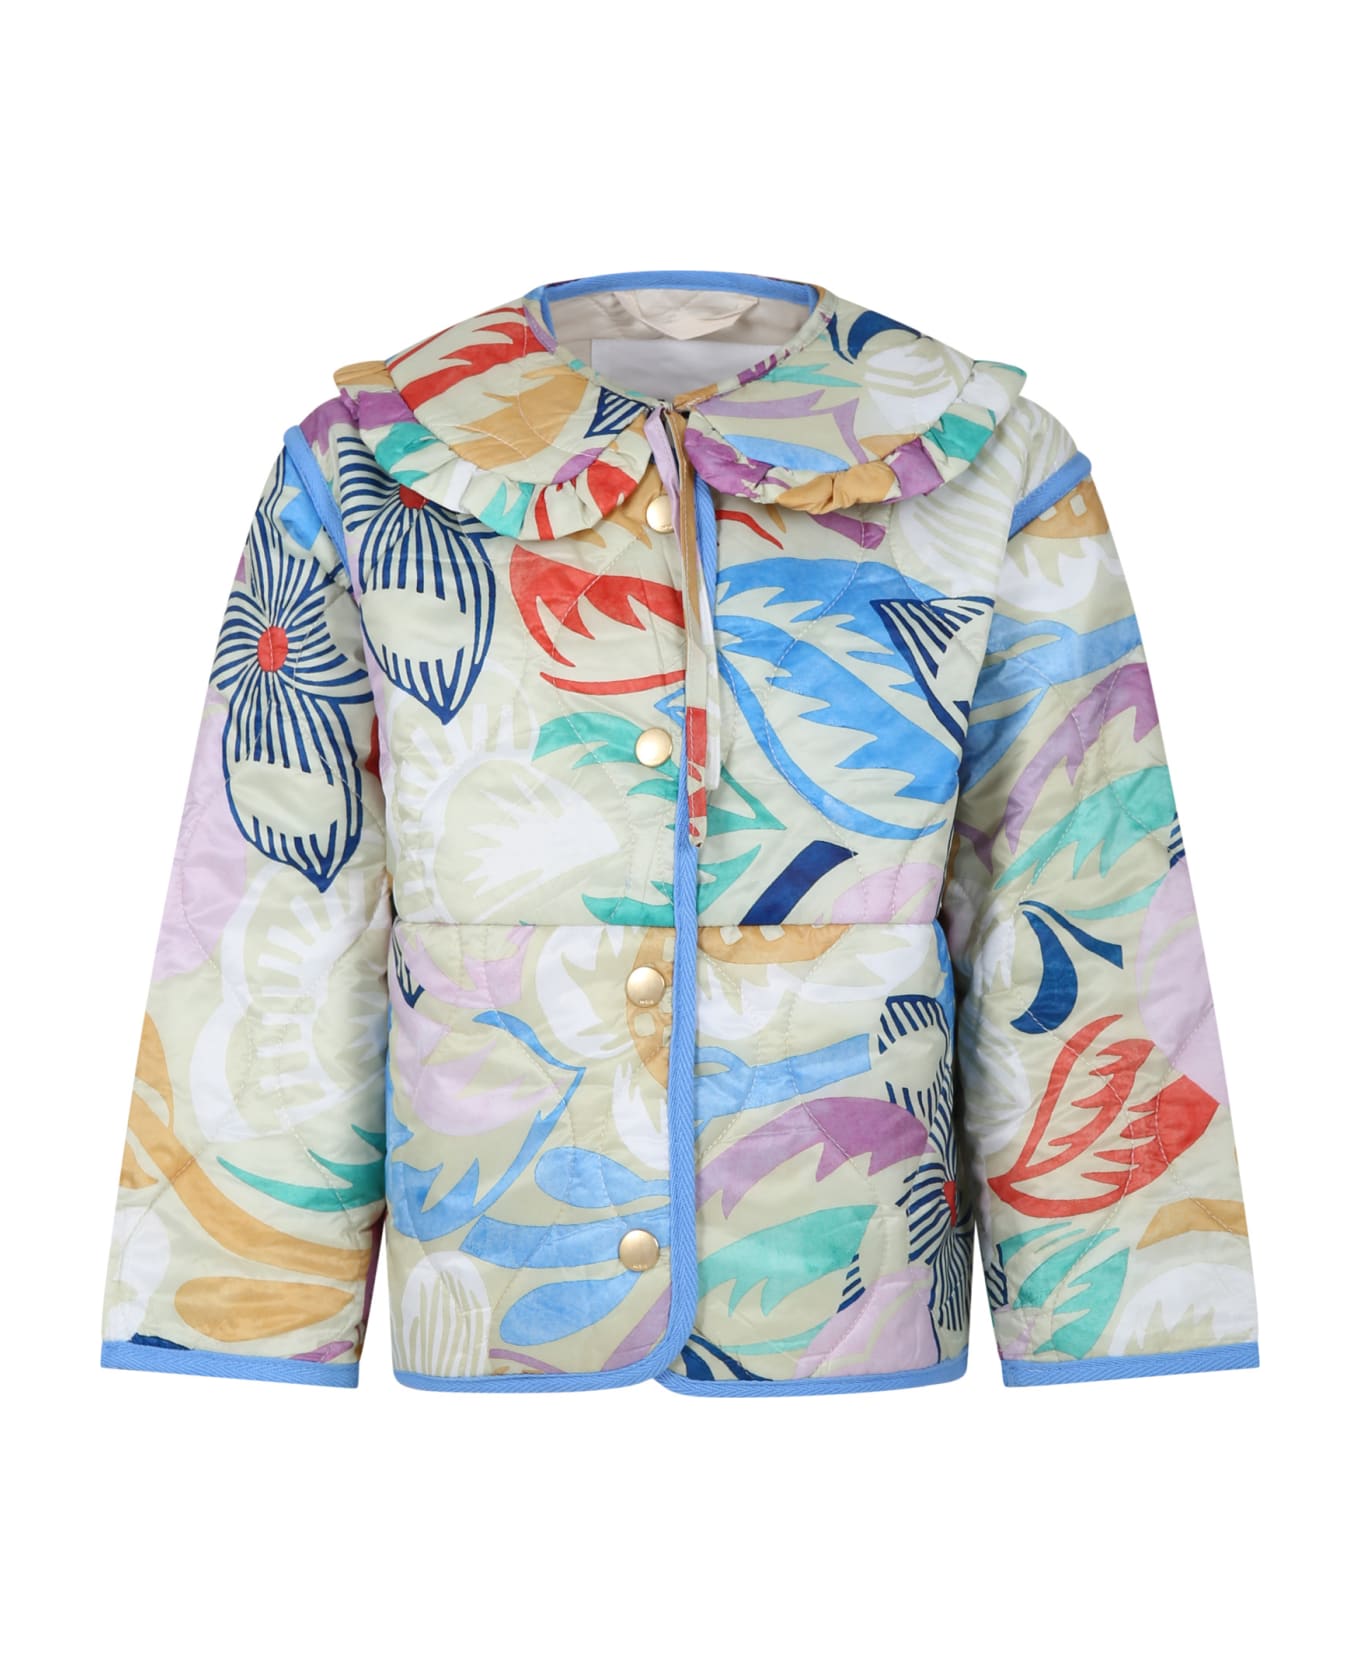 Molo Multicolor Down Jacket For Girl - Multicolor